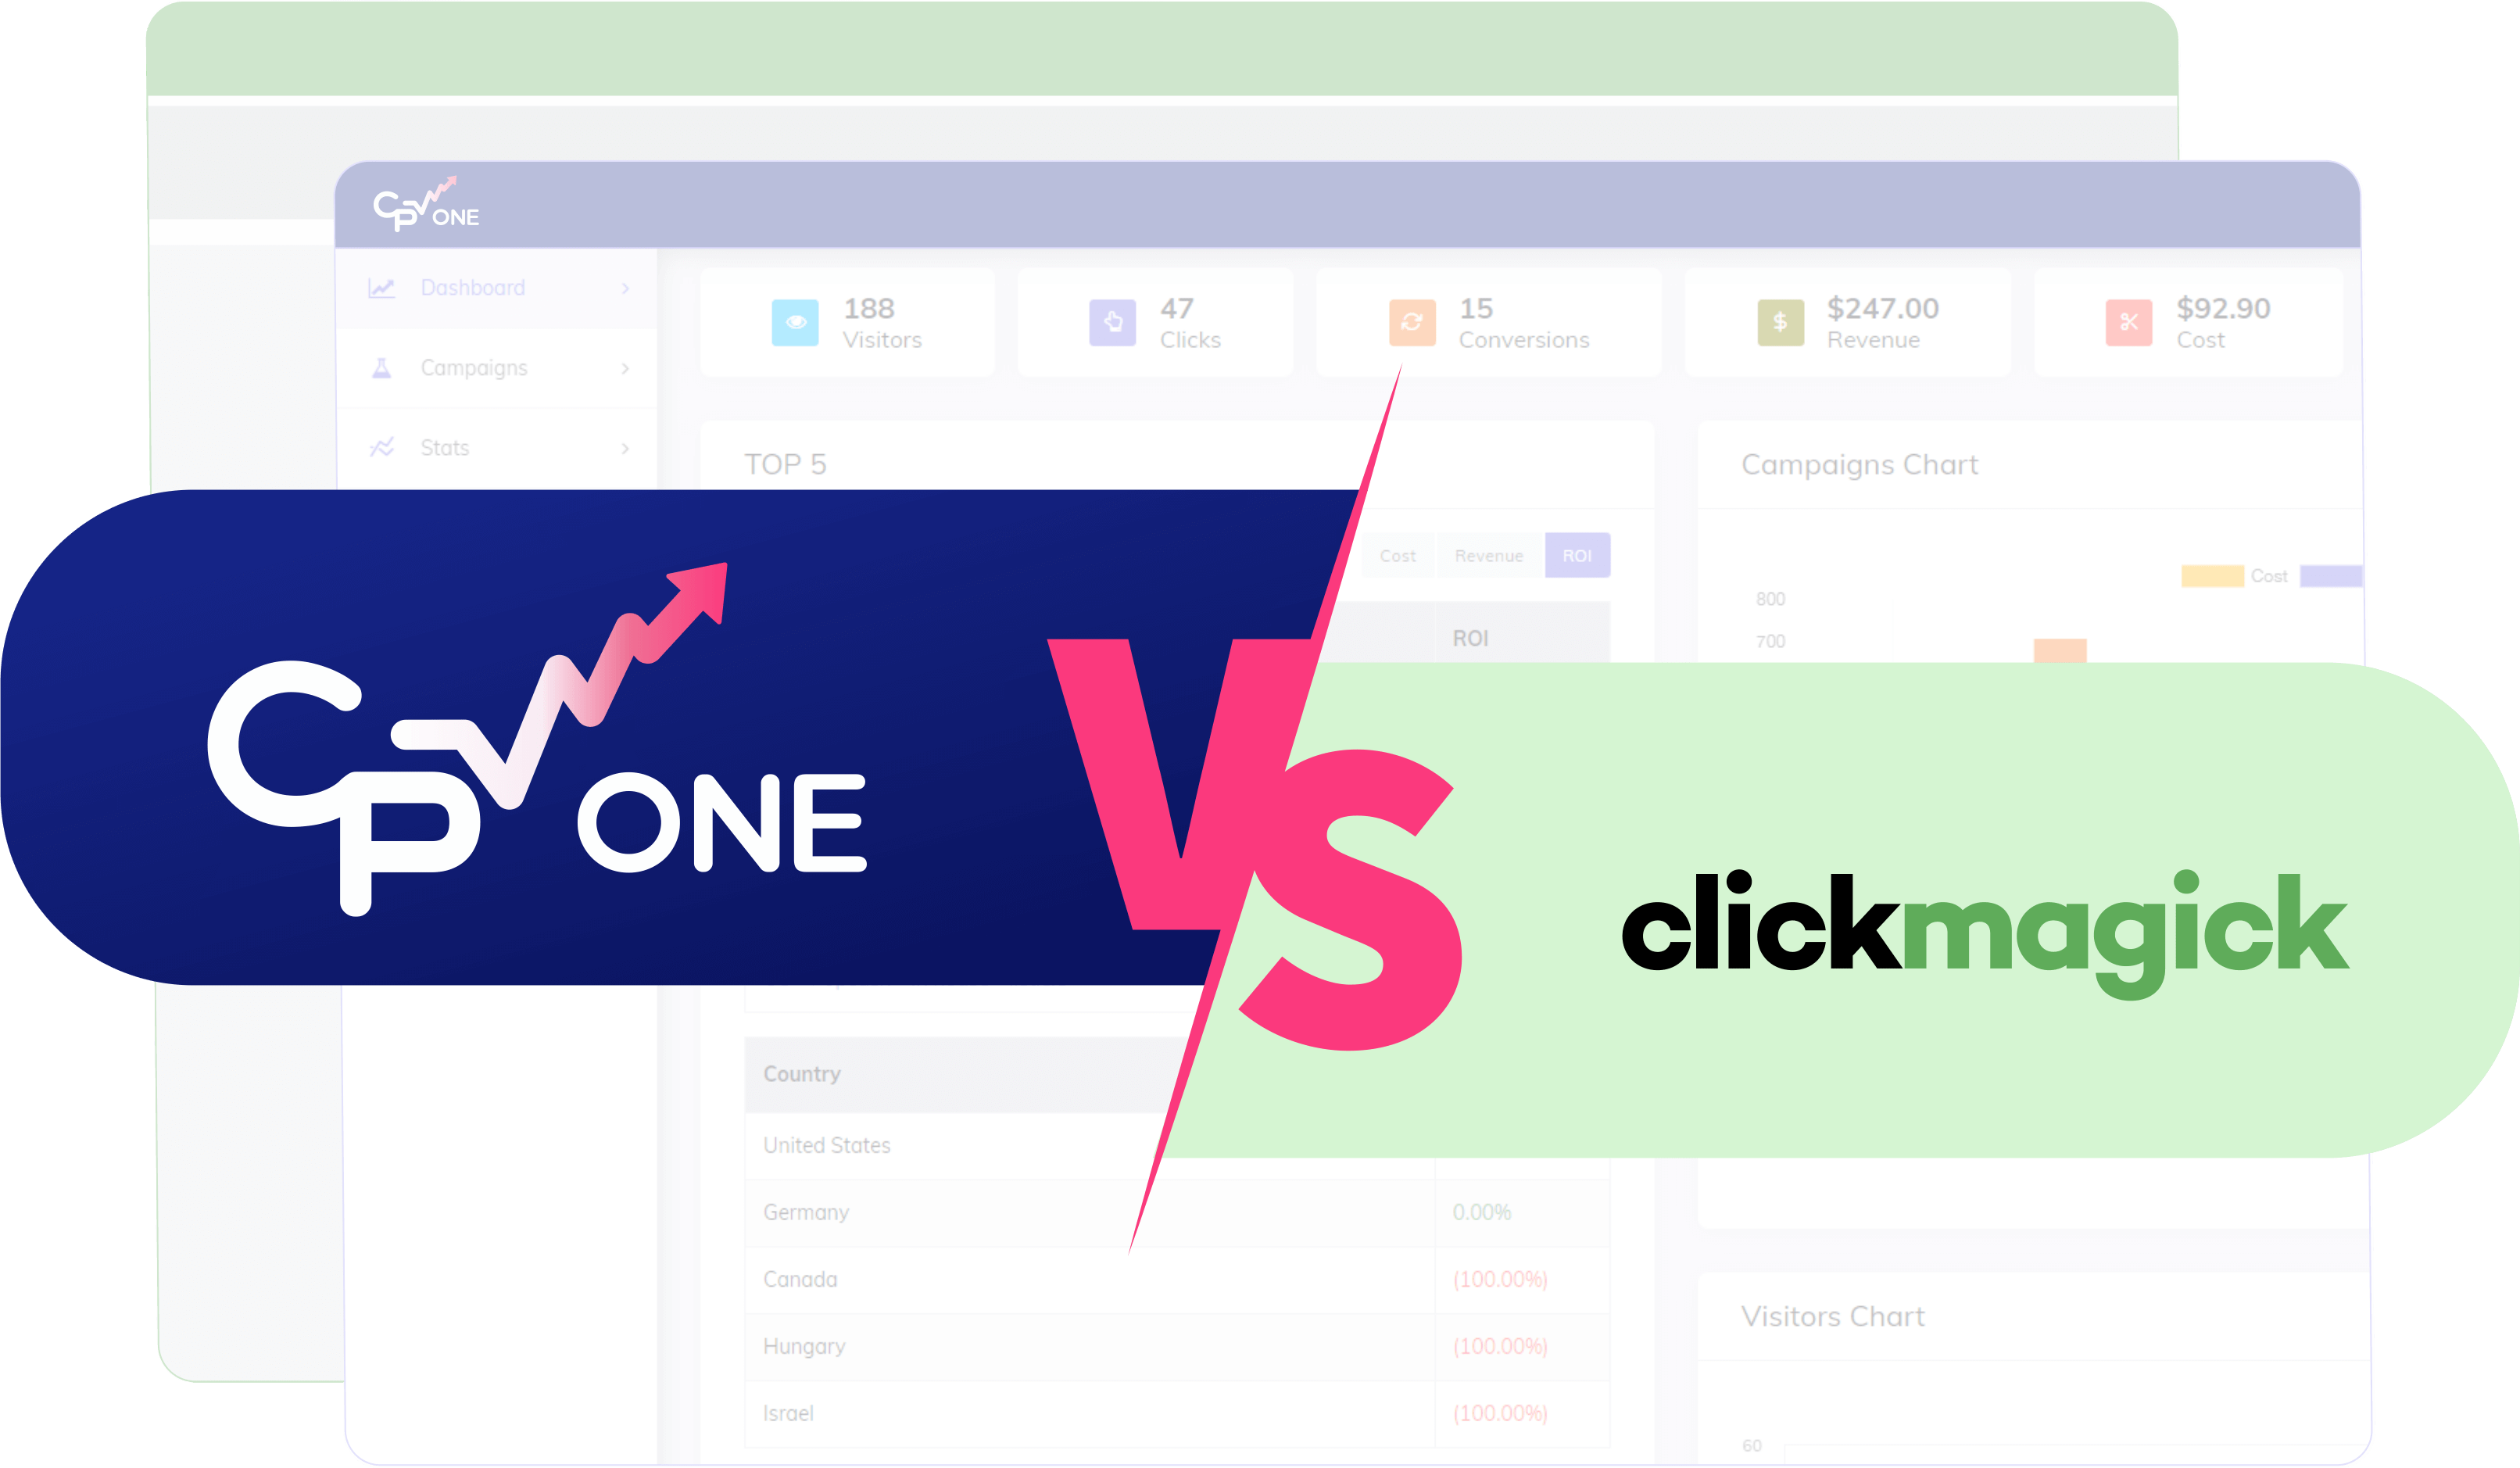 CPV One vs ClickMagick